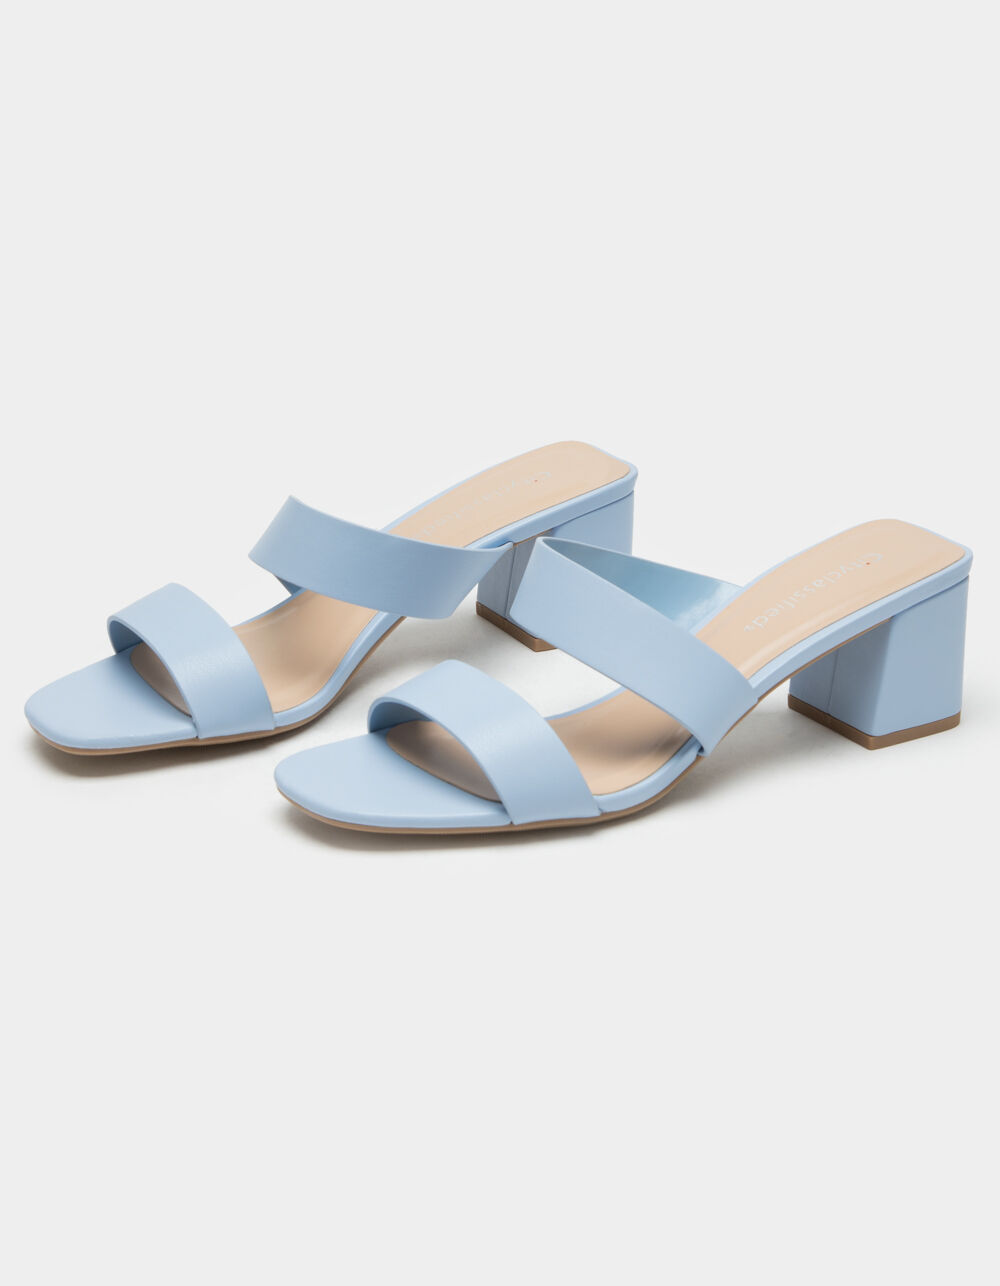 CITY CLASSIFIED Asymmetrical Womens Blue Block Heel Mules - BLUE | Tillys